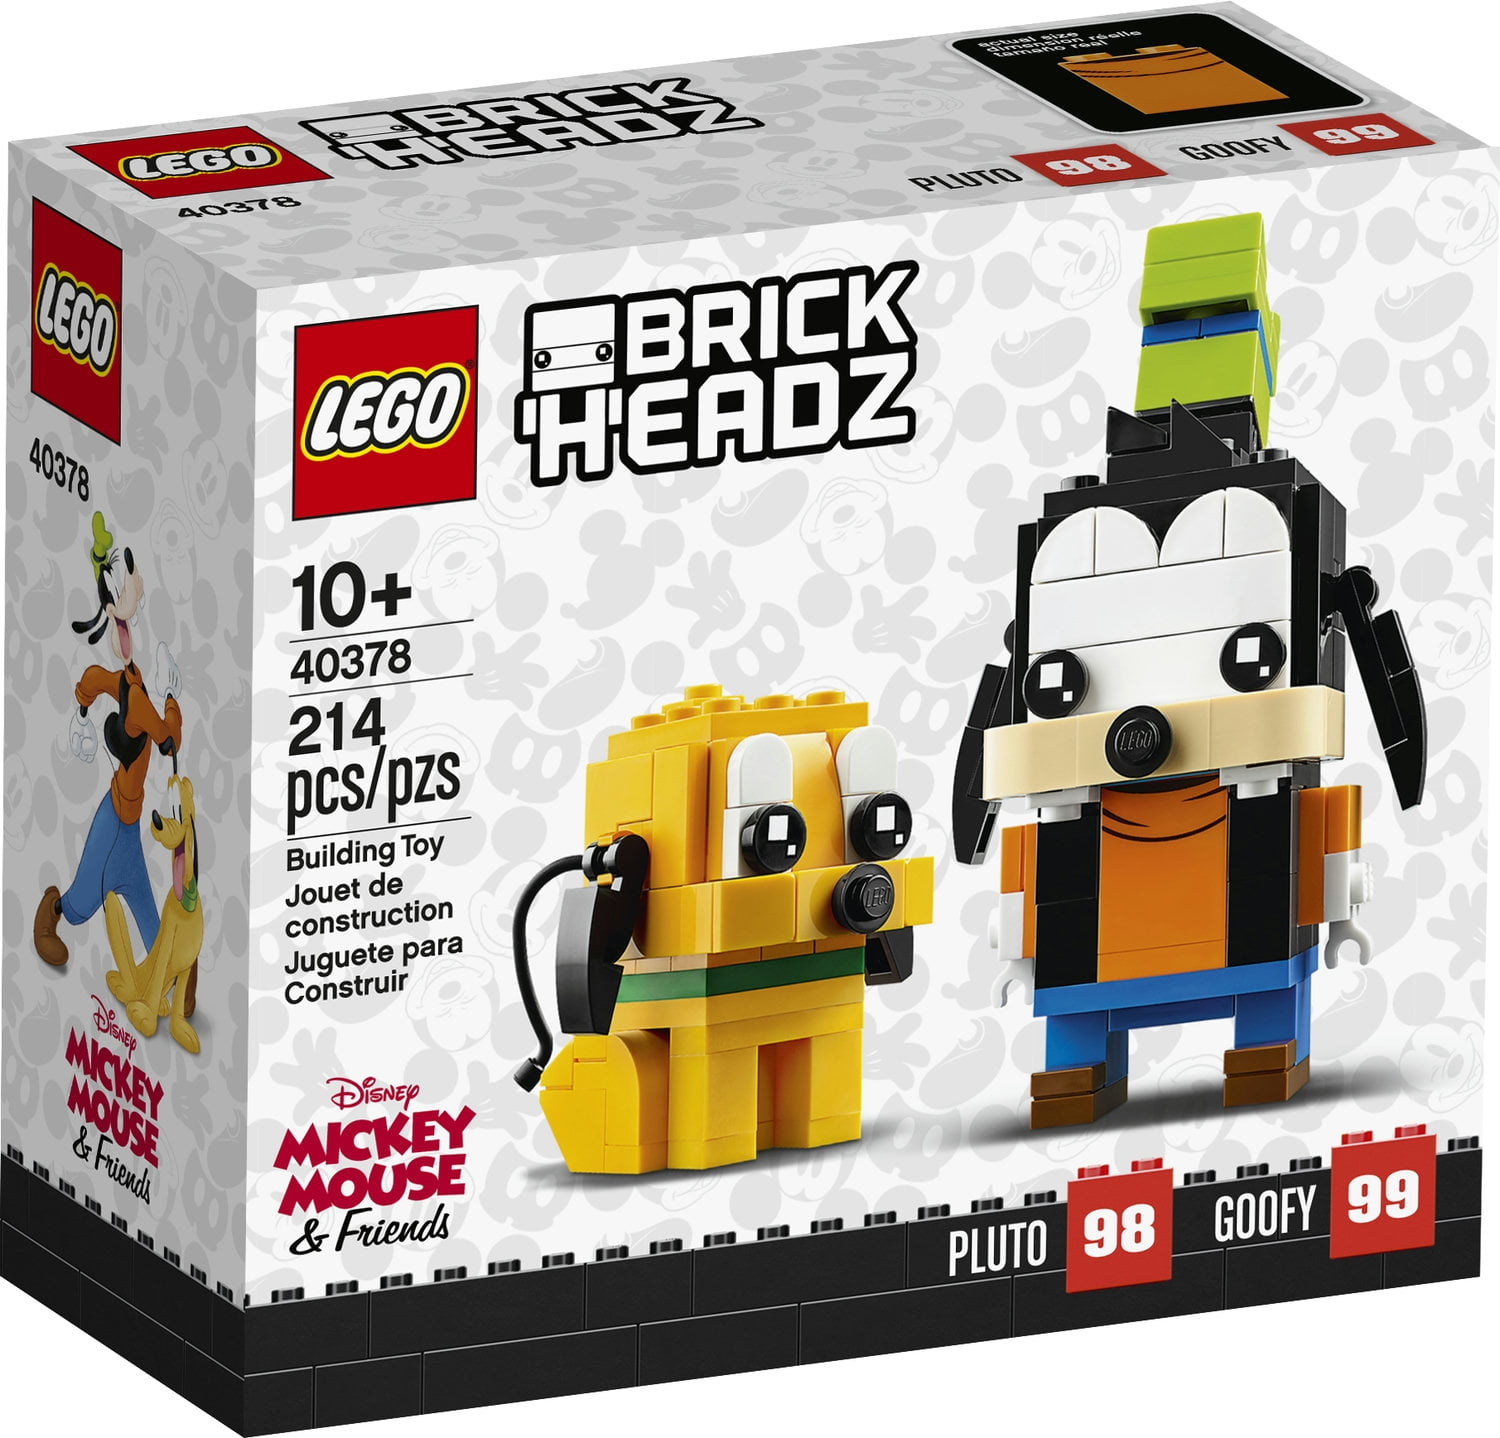 Lego brickheadz St-Valentin Bear 40379 Building Kit Neuf 2021 150 pieces 